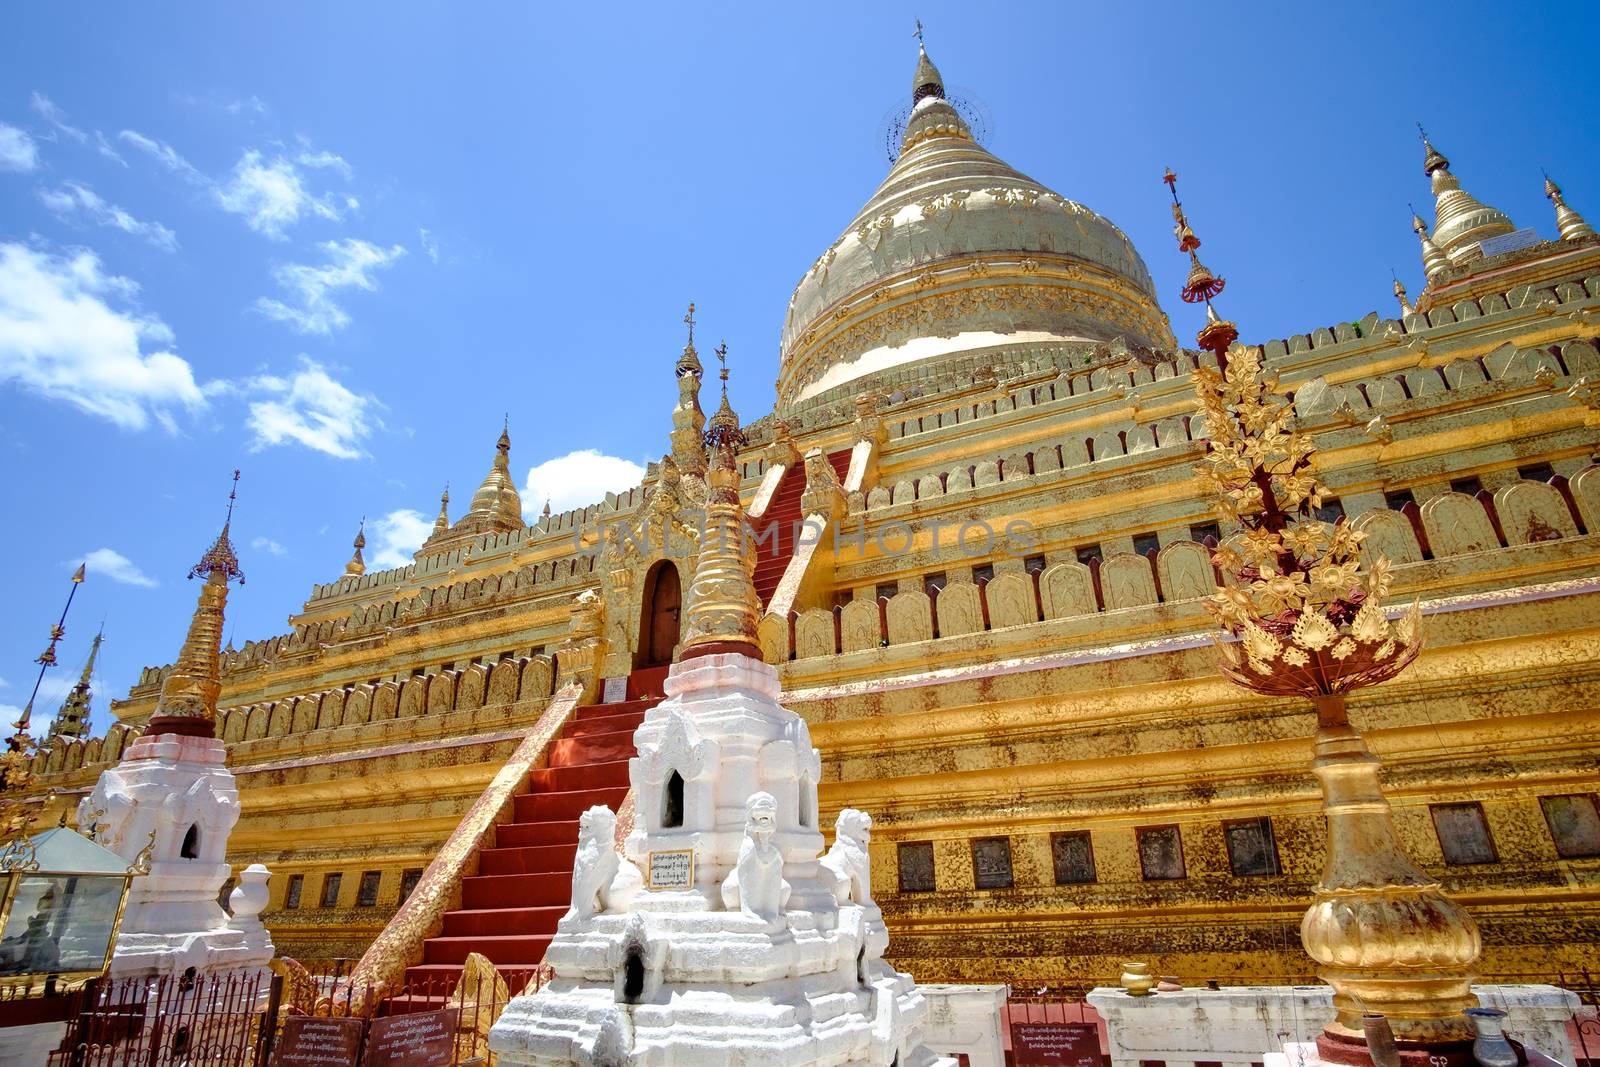 Scenic view of golden Shwezigon pagoda in Bagan, Myanmar